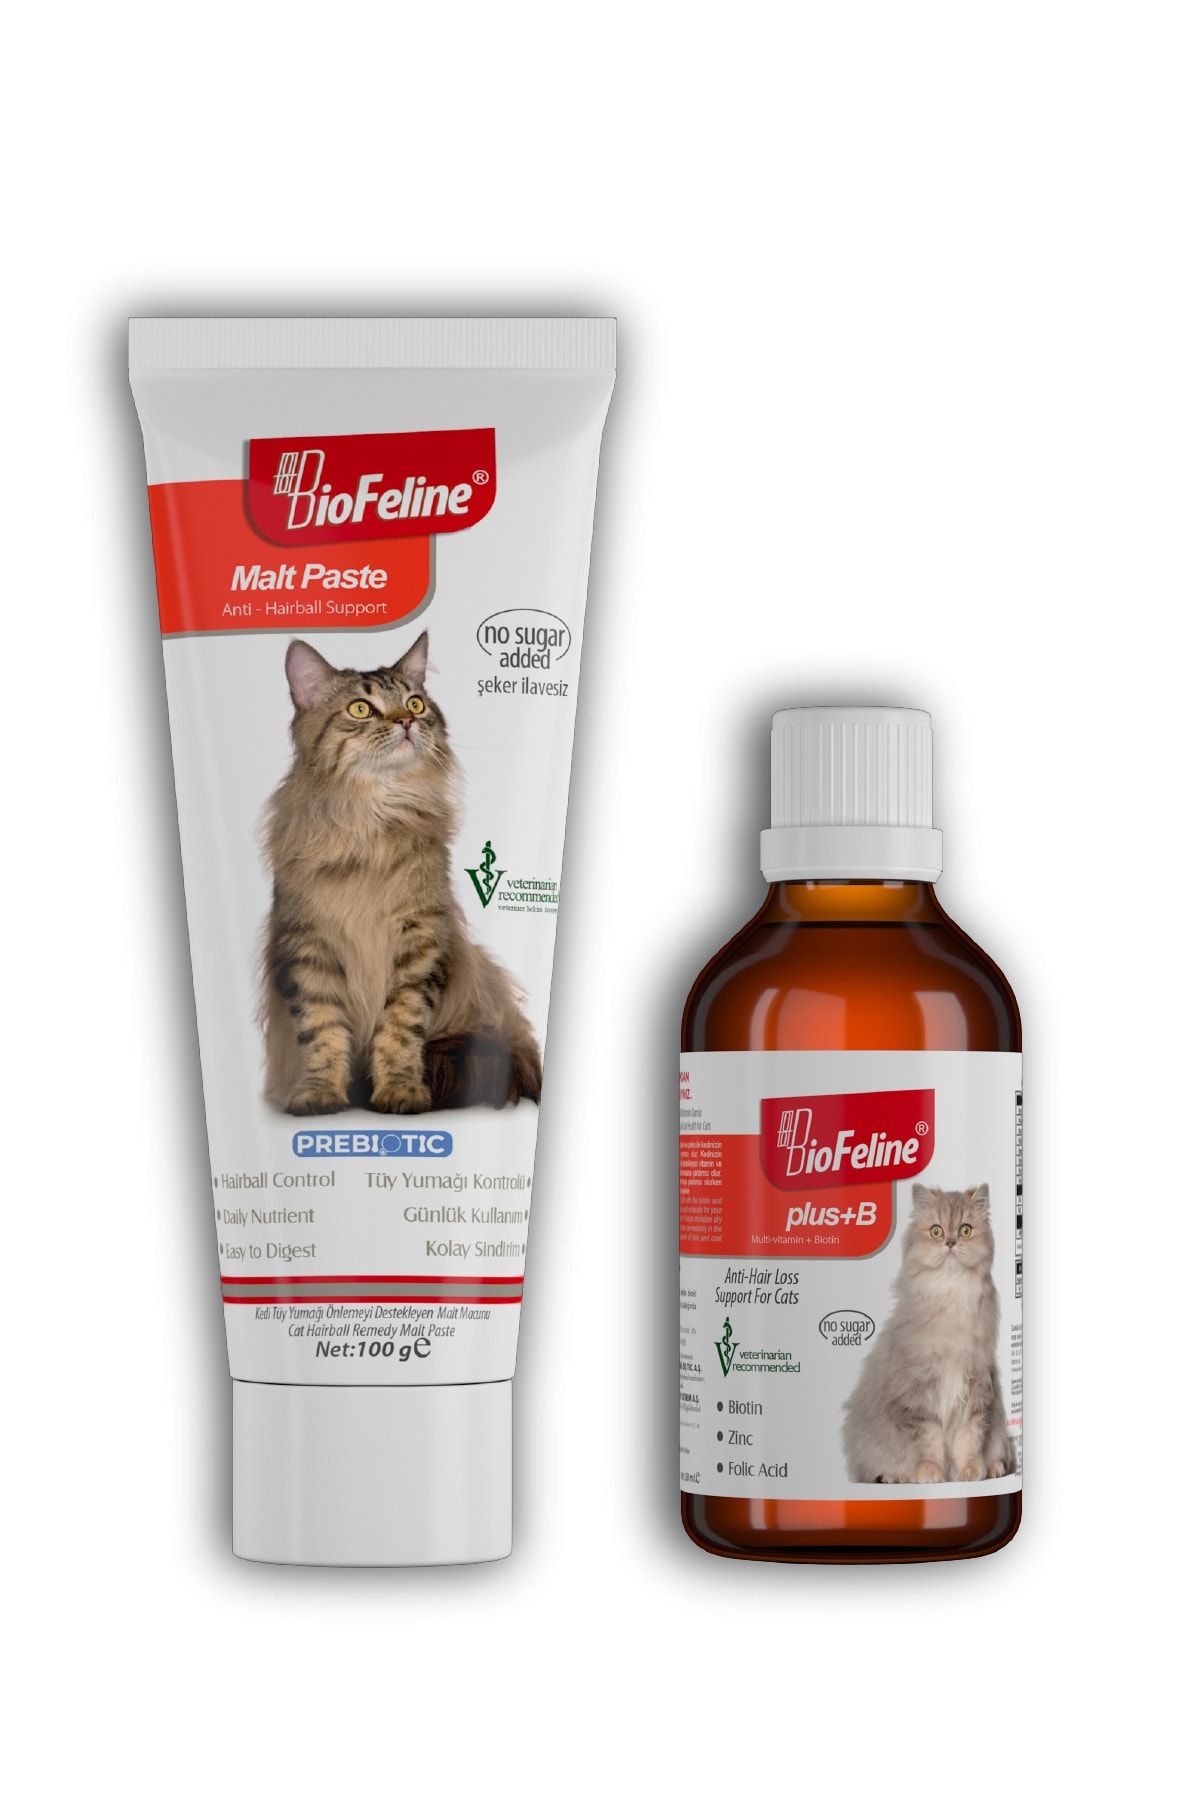 BioFeline Kedi Seti (MALT PASTE & PLUS B FOR CATS)